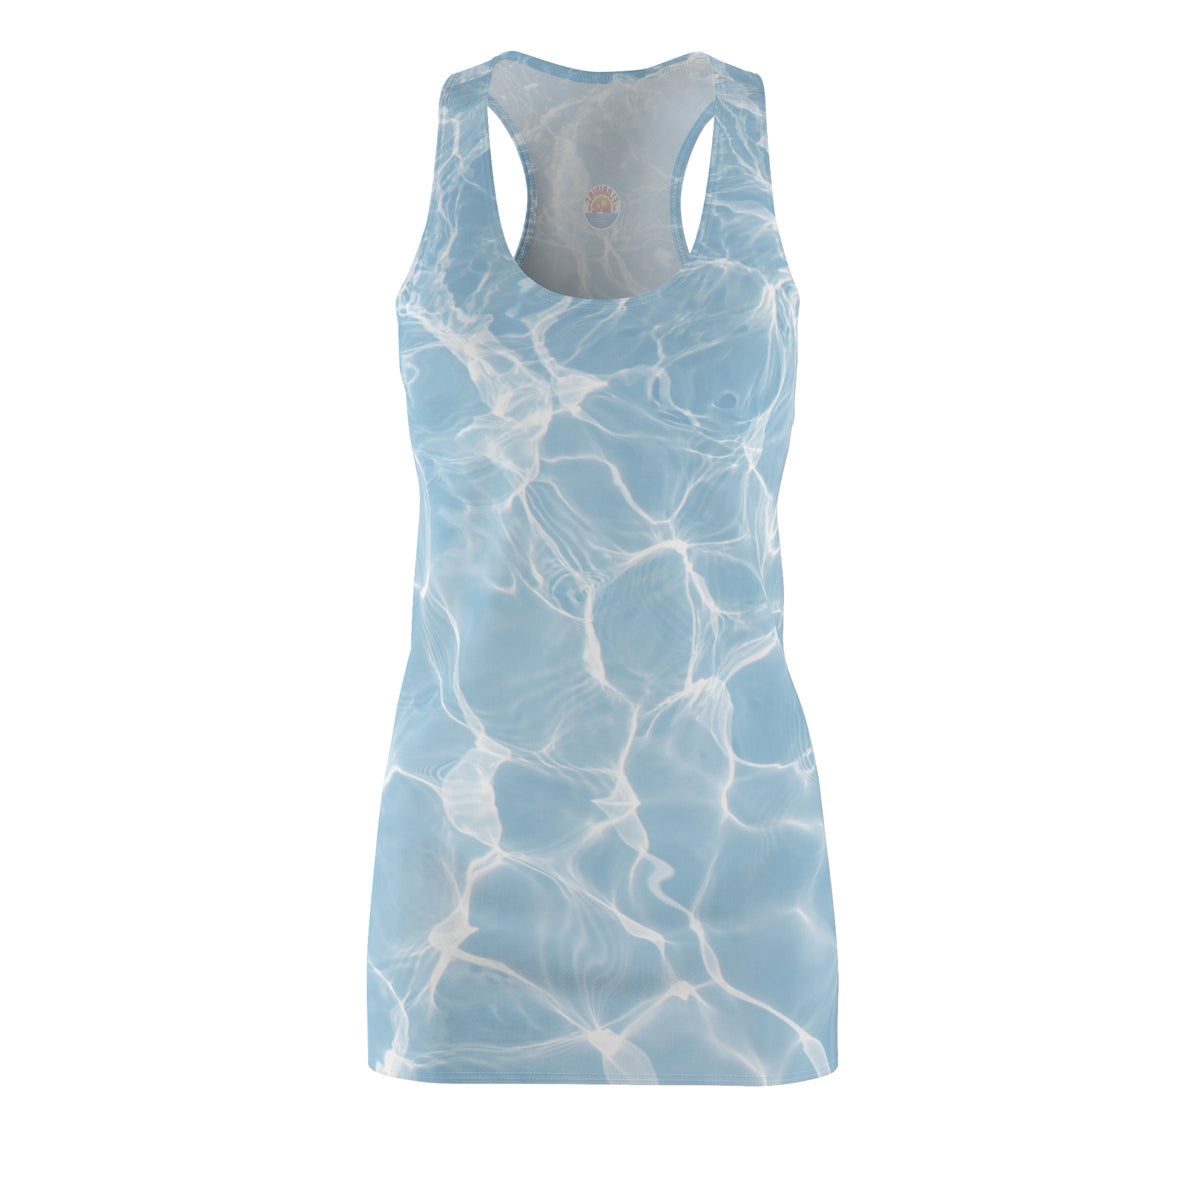 Tranquil Water Print Women's Racerback Dress/Beach Cover Up